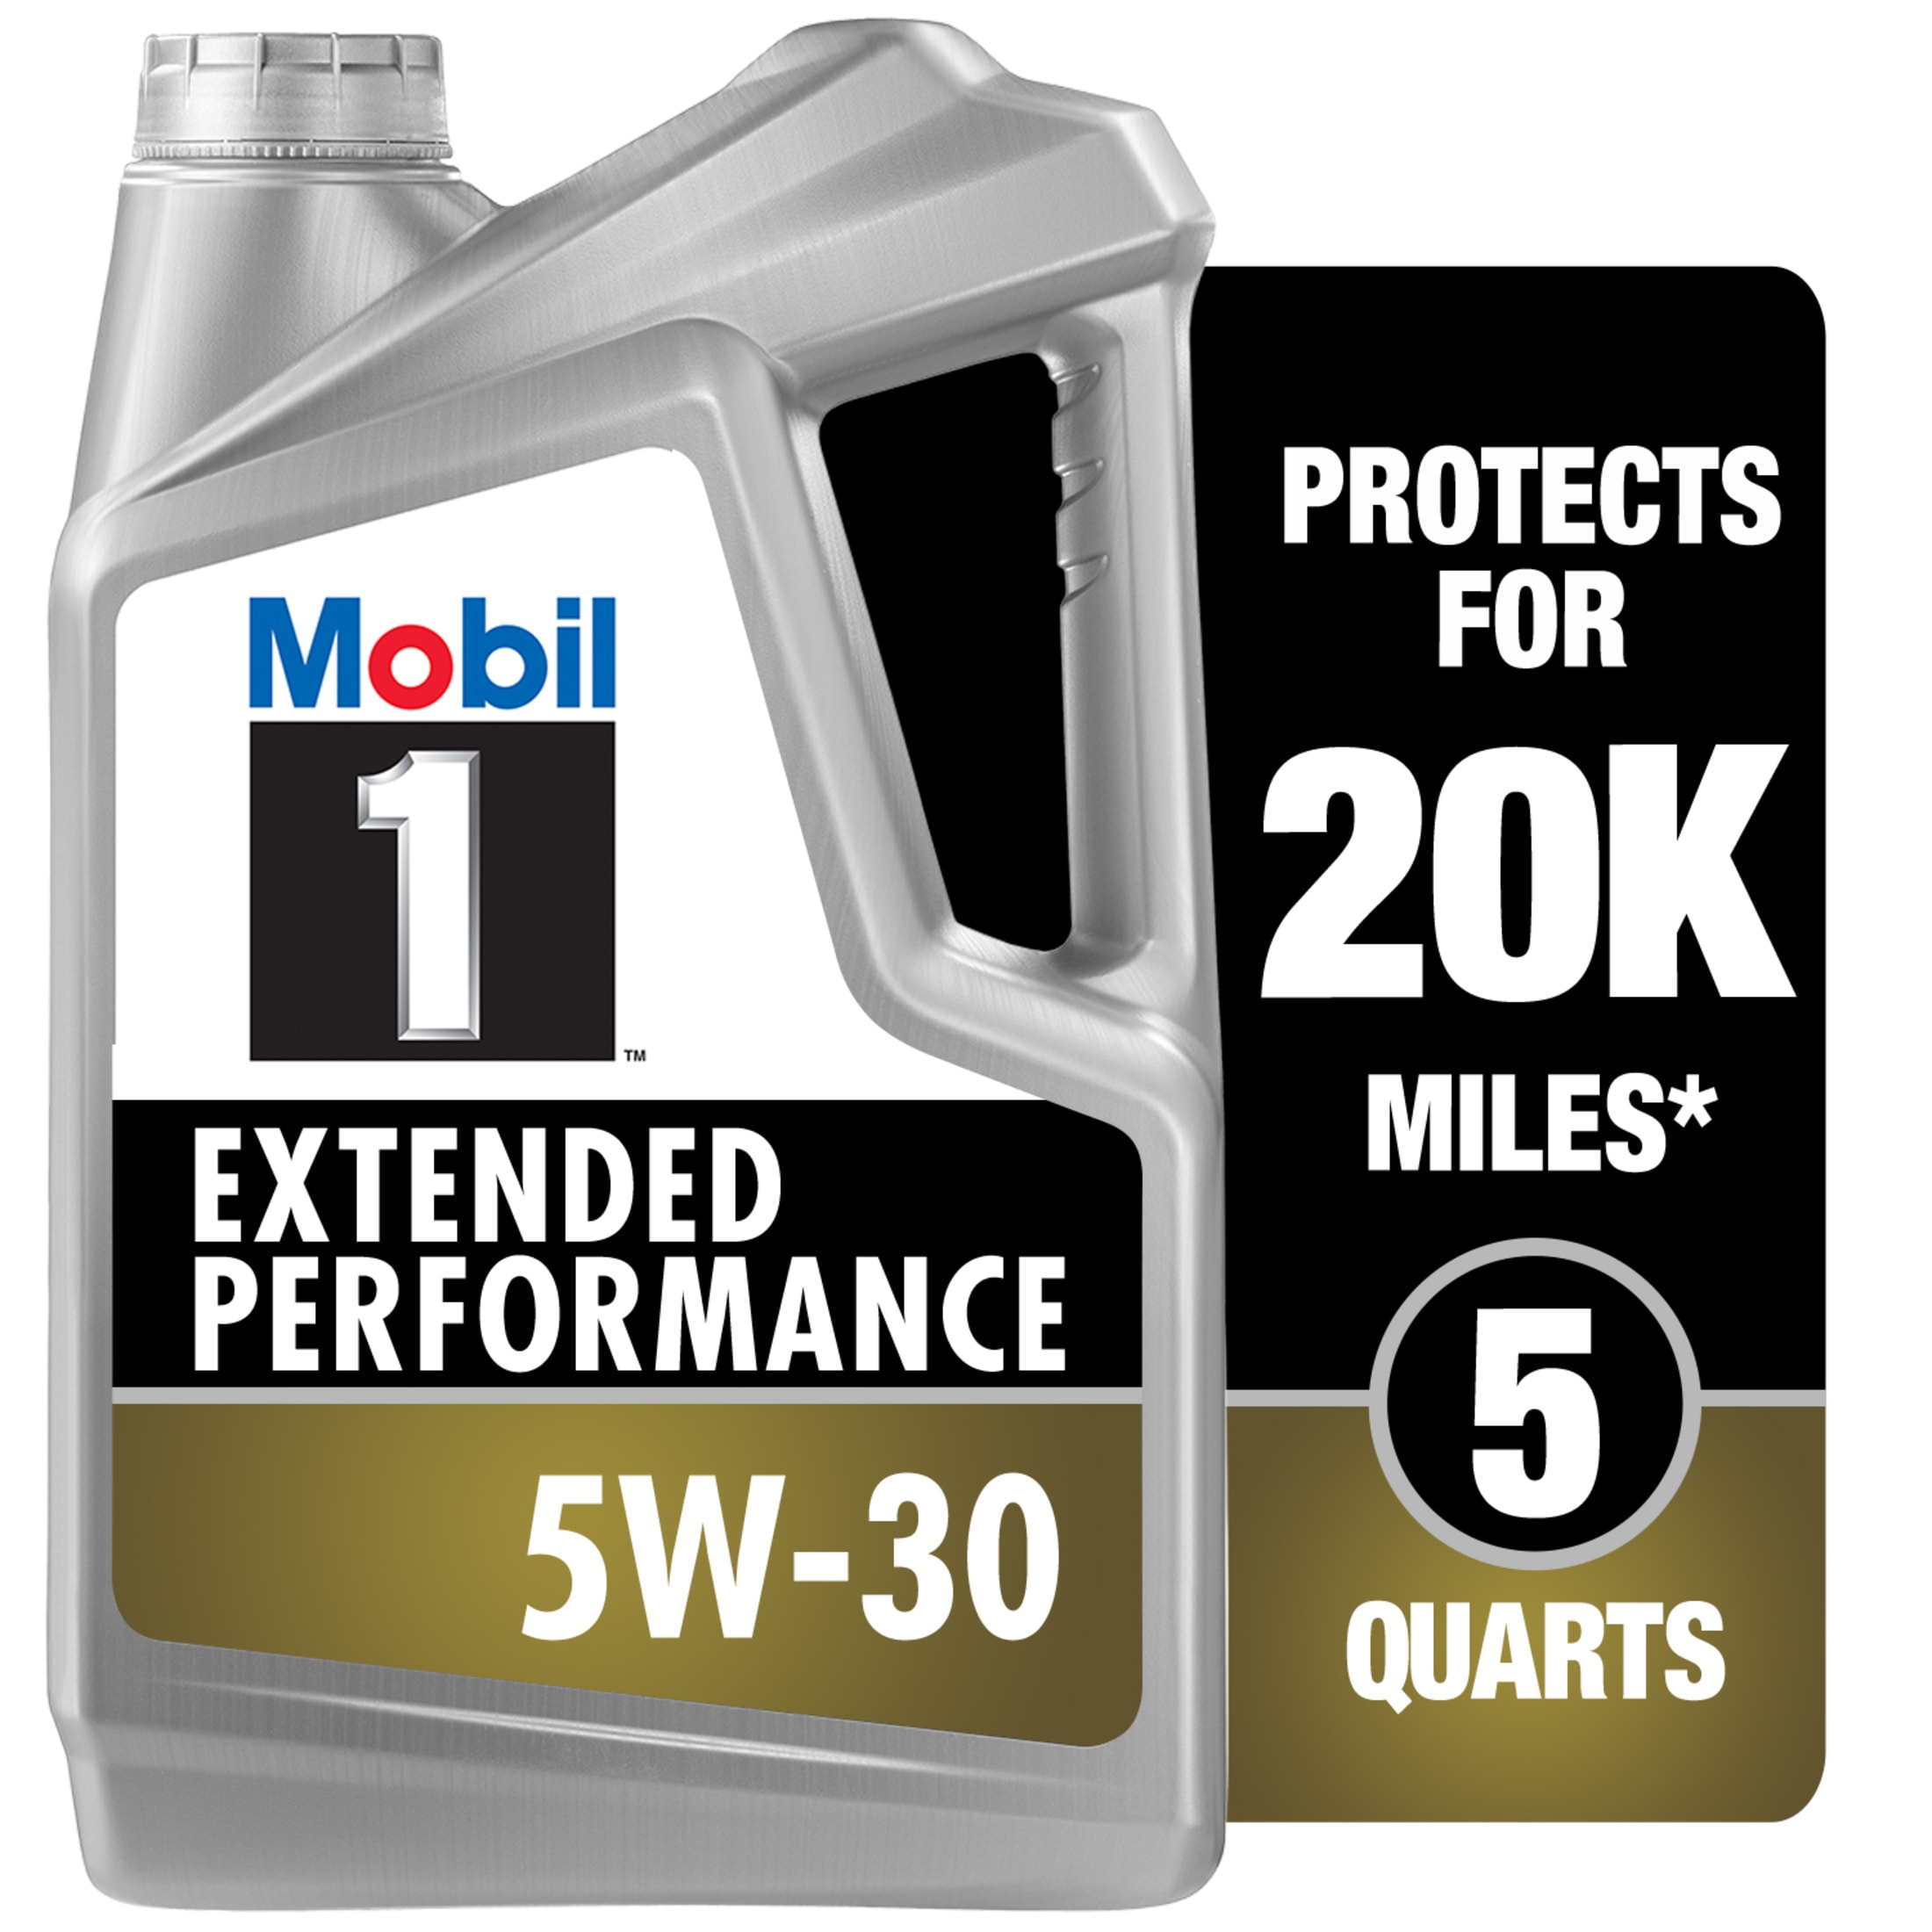 Mobil 1 Extended Performance Full Synthetic Motor Oil 5W-30, 5 Quart - image 3 of 9